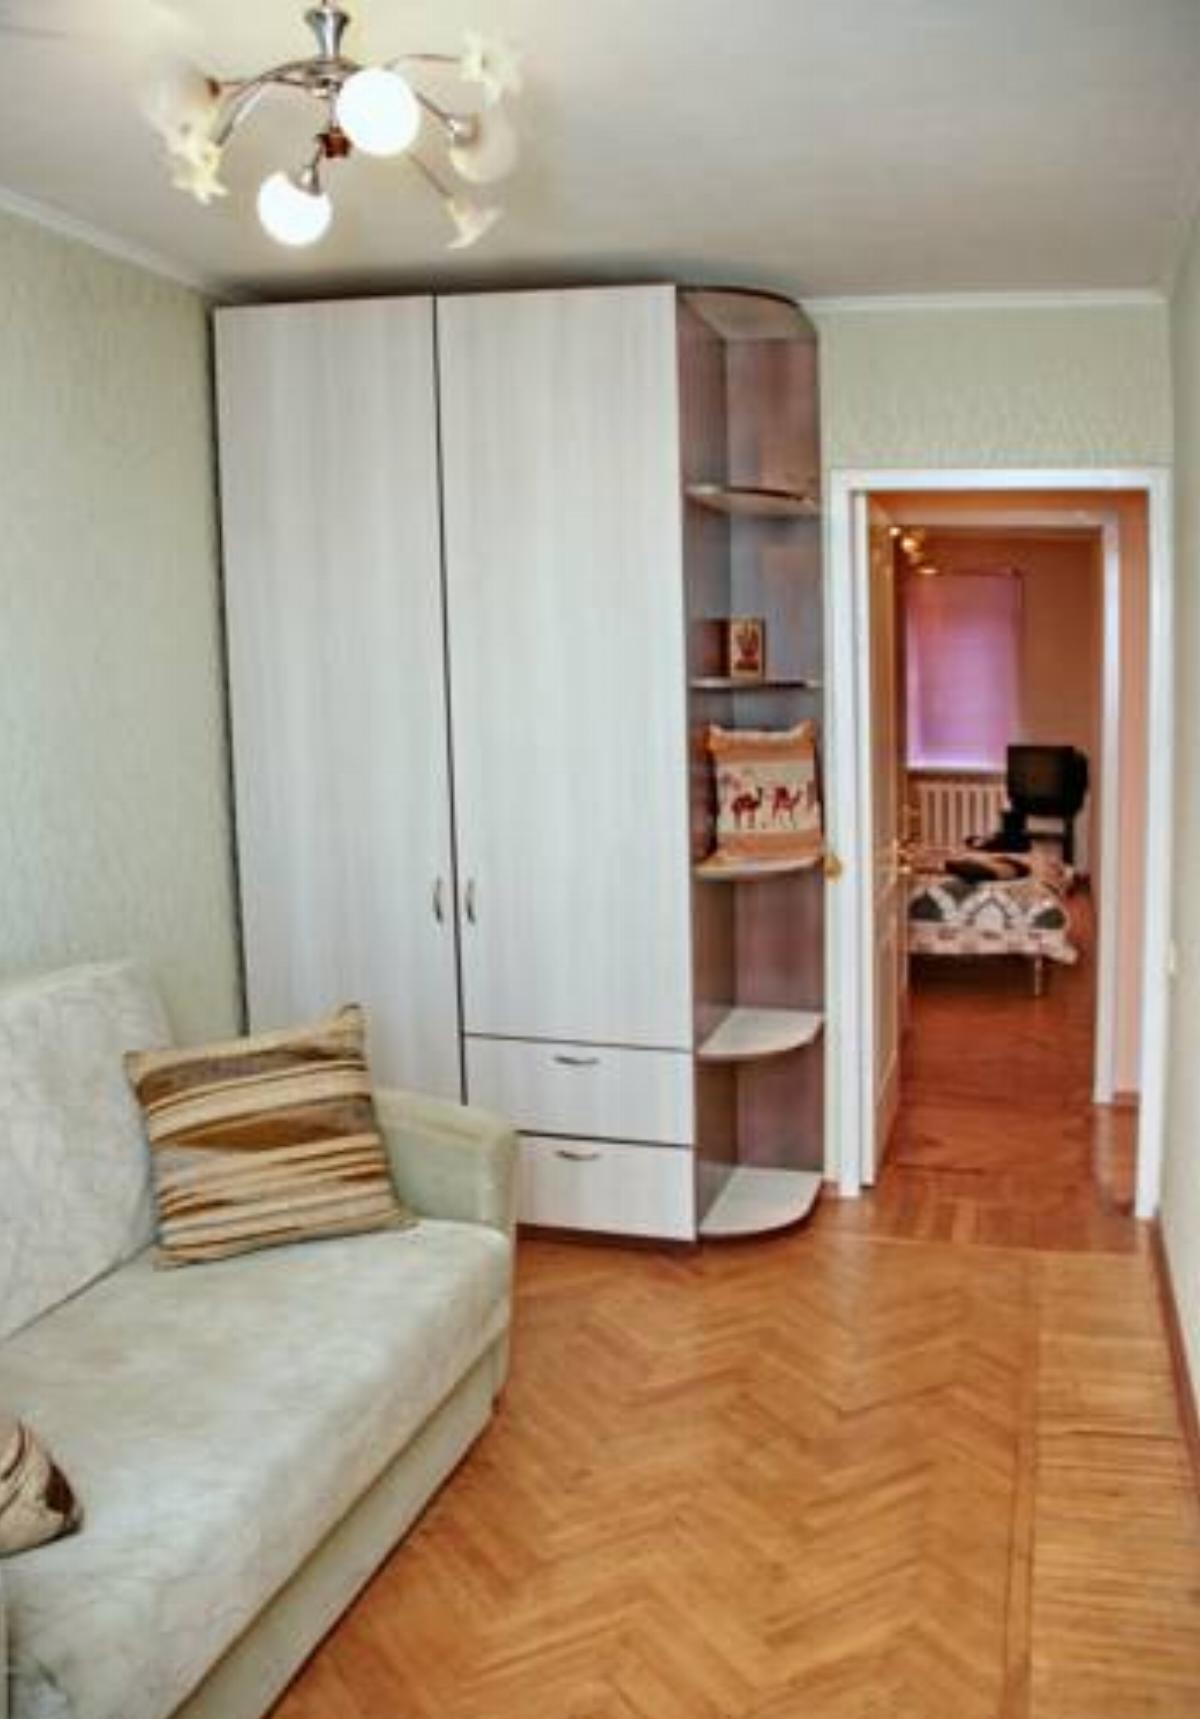 Apartments Kirov Hotel Dnipro Ukraine